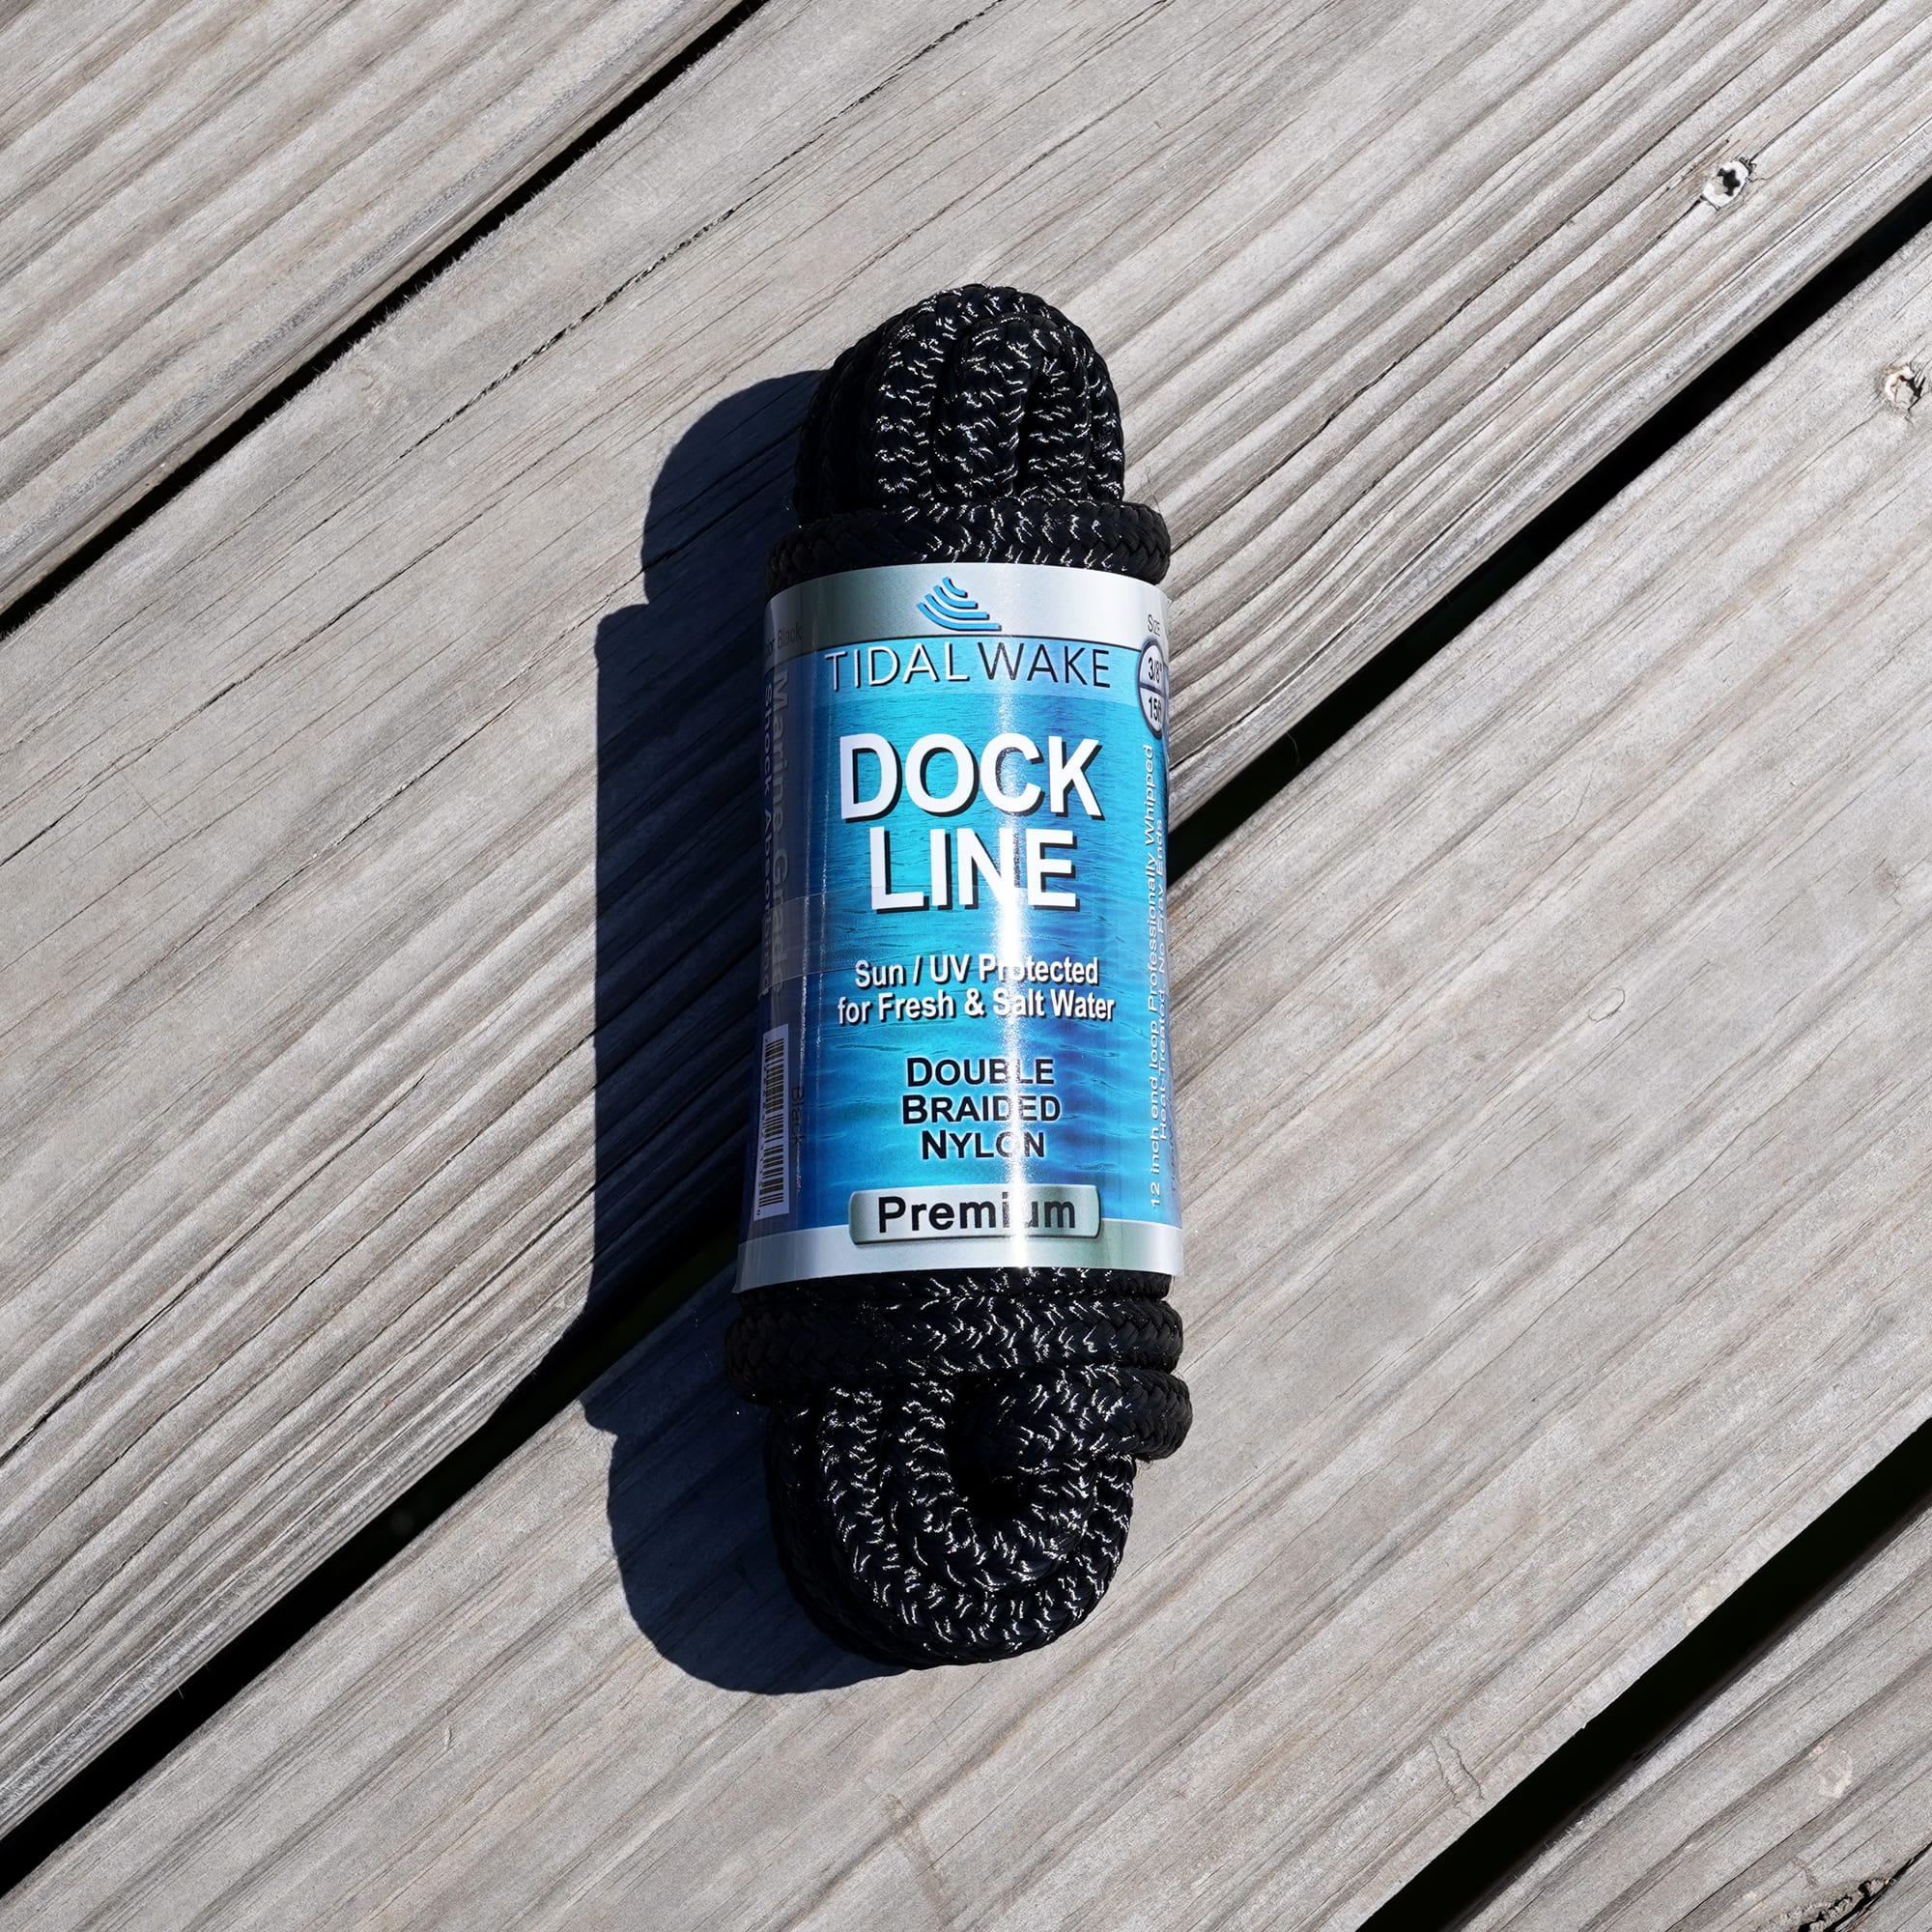 Double Braided Nylon 3/8″ x 15 Feet- 4 Pack Navy Blue Tidal Wake Marine Grade Premium Dock Line 